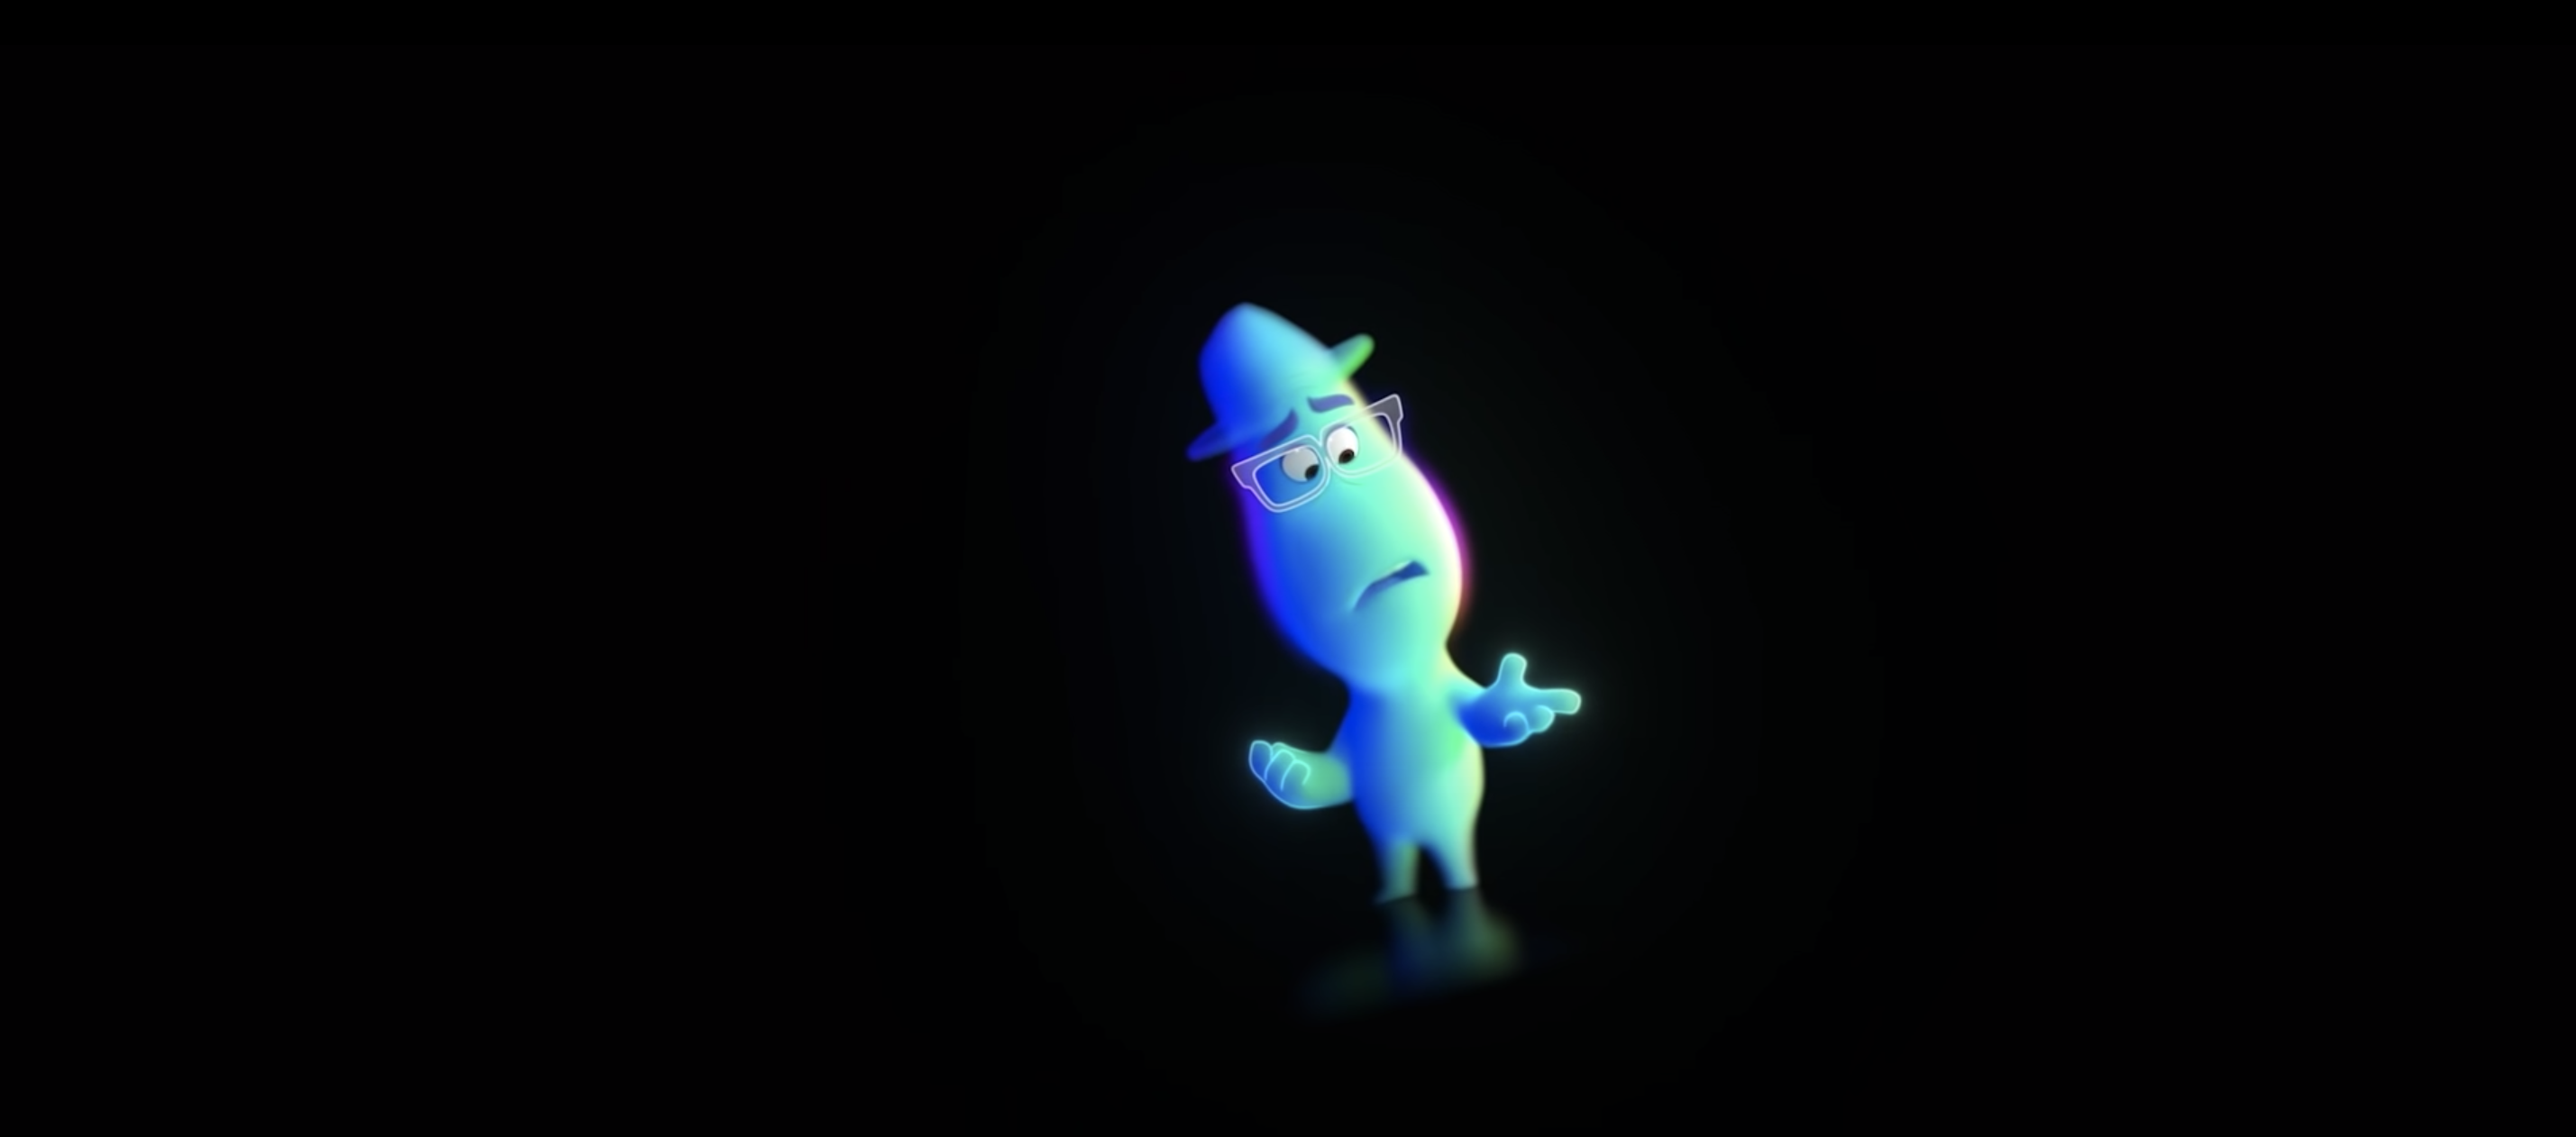 Trailer for Pixar's Soul (Pixar)